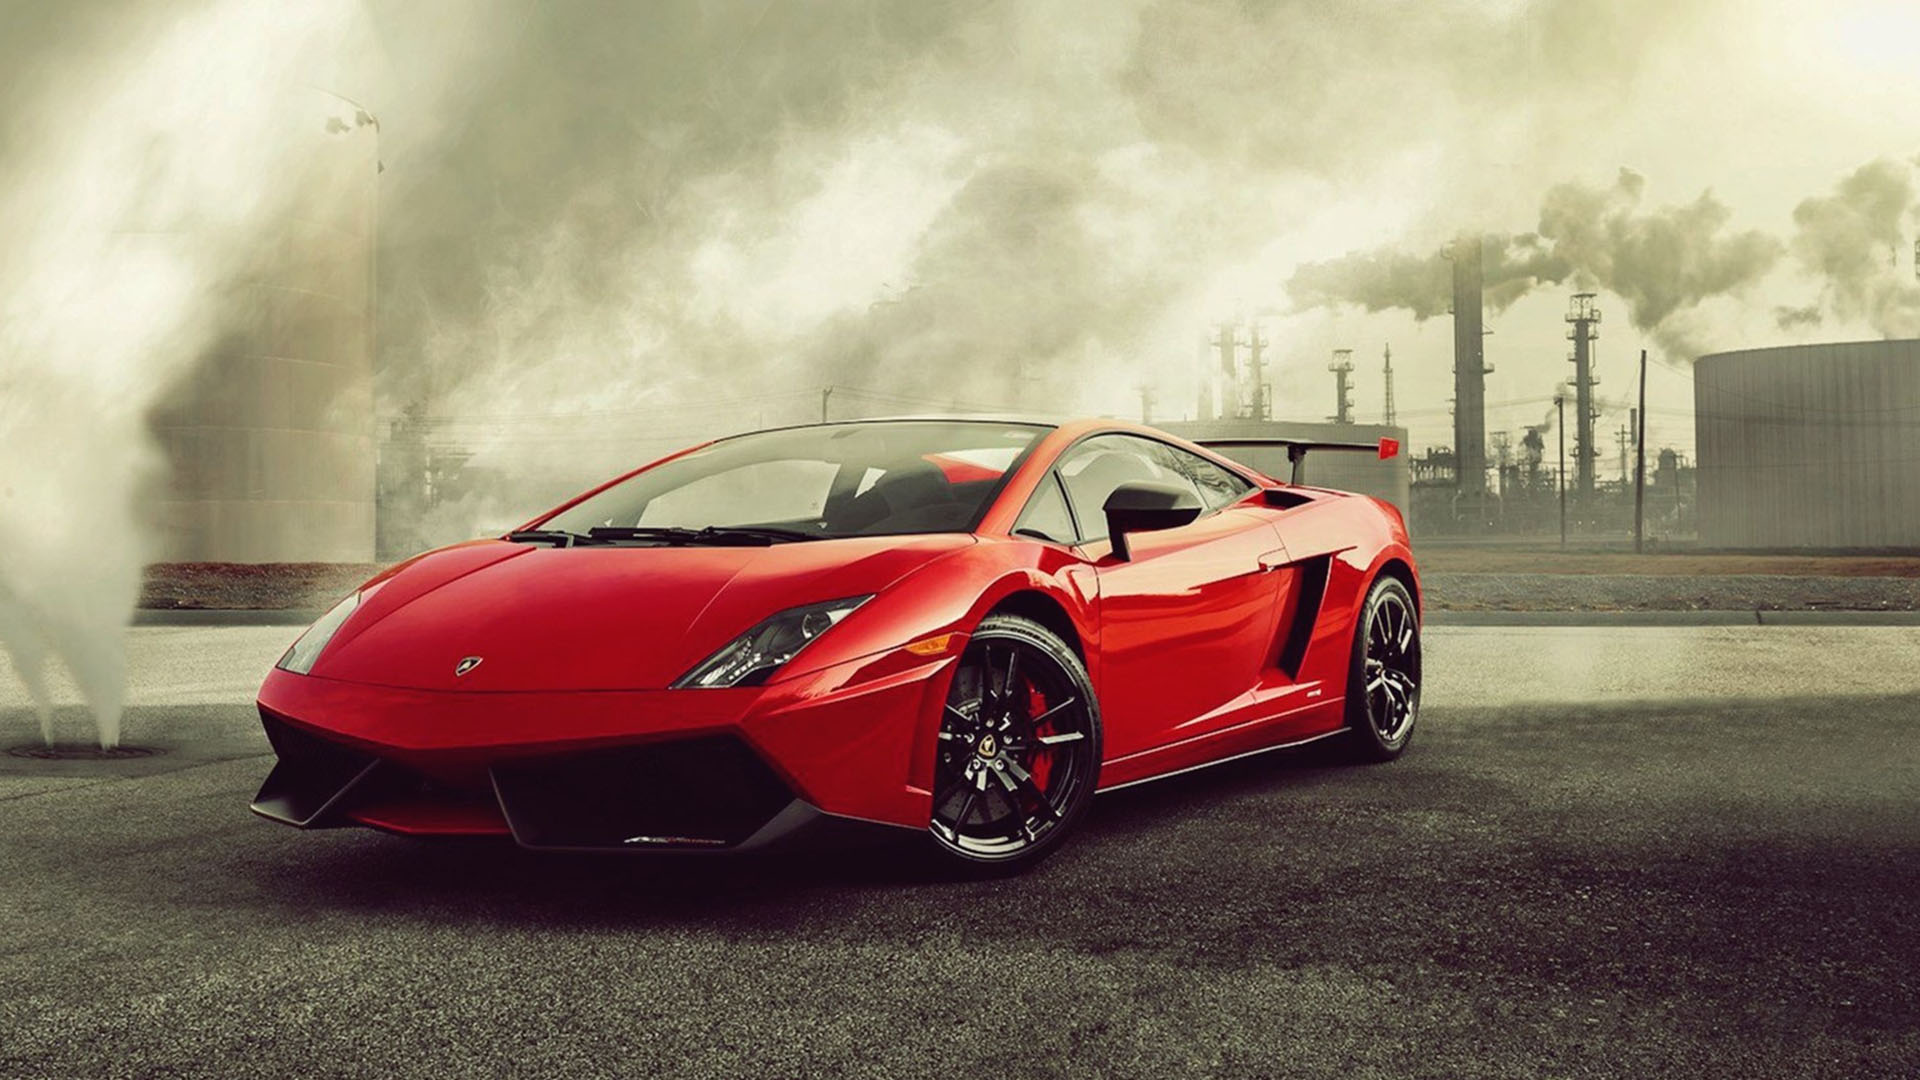 Free download New Lamborghini Gallardo HD Wallpapers Cars Background